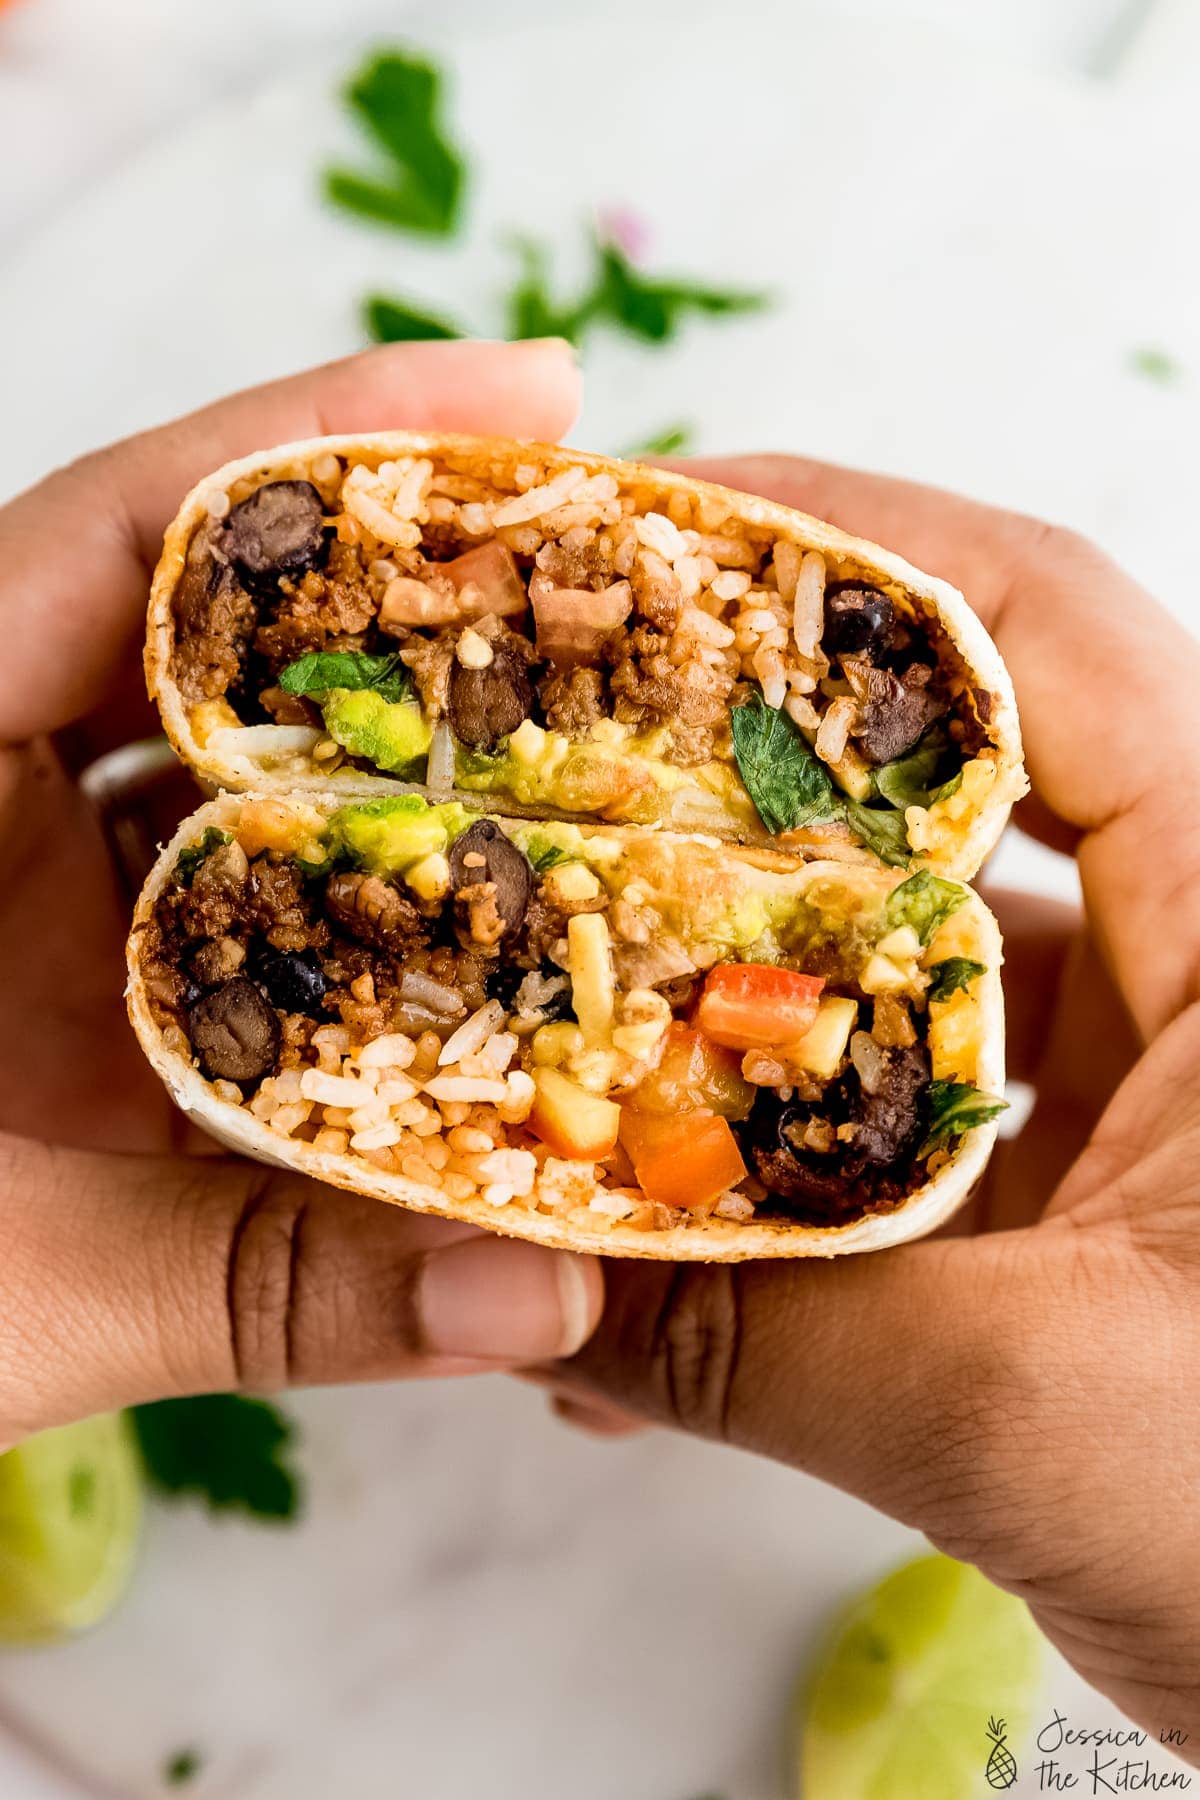 Hands holding vegan burrito that is cut in half.